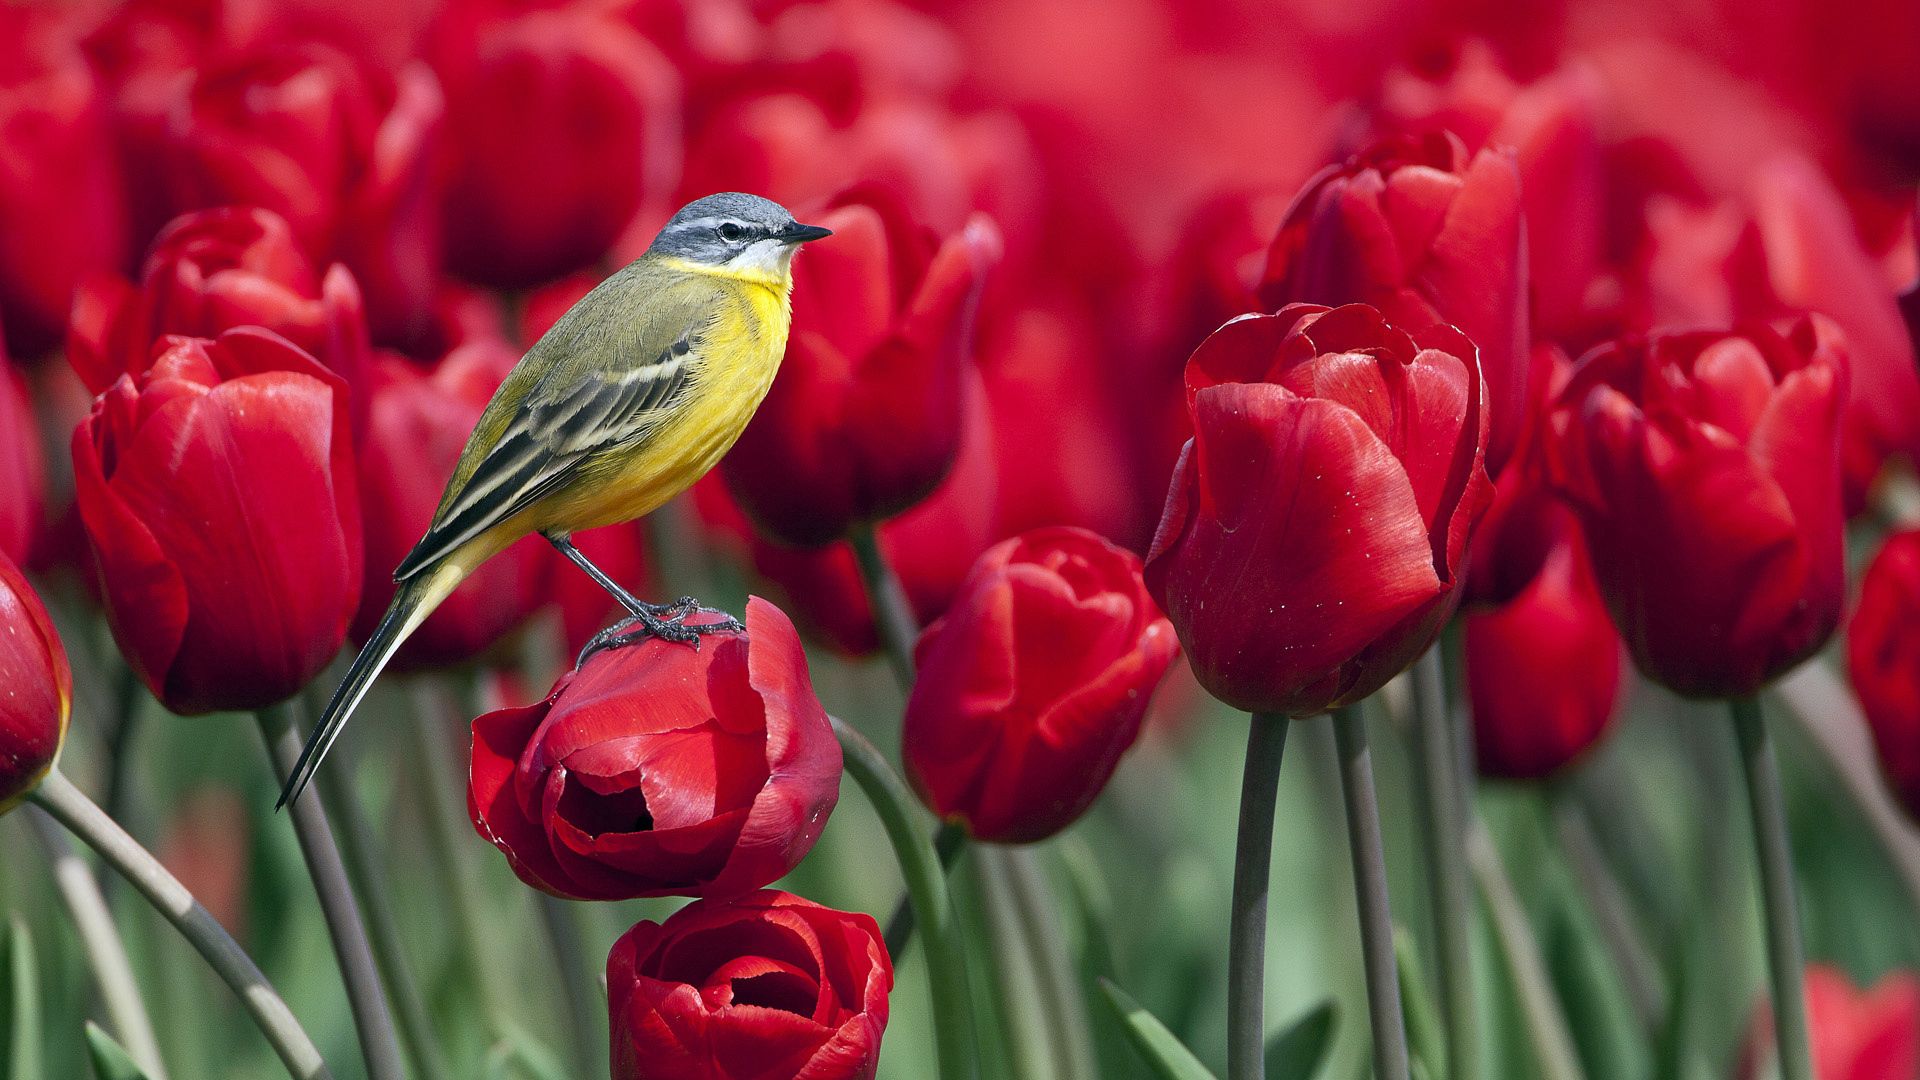 tulips, animals, flowers, bird wallpaper for mobile